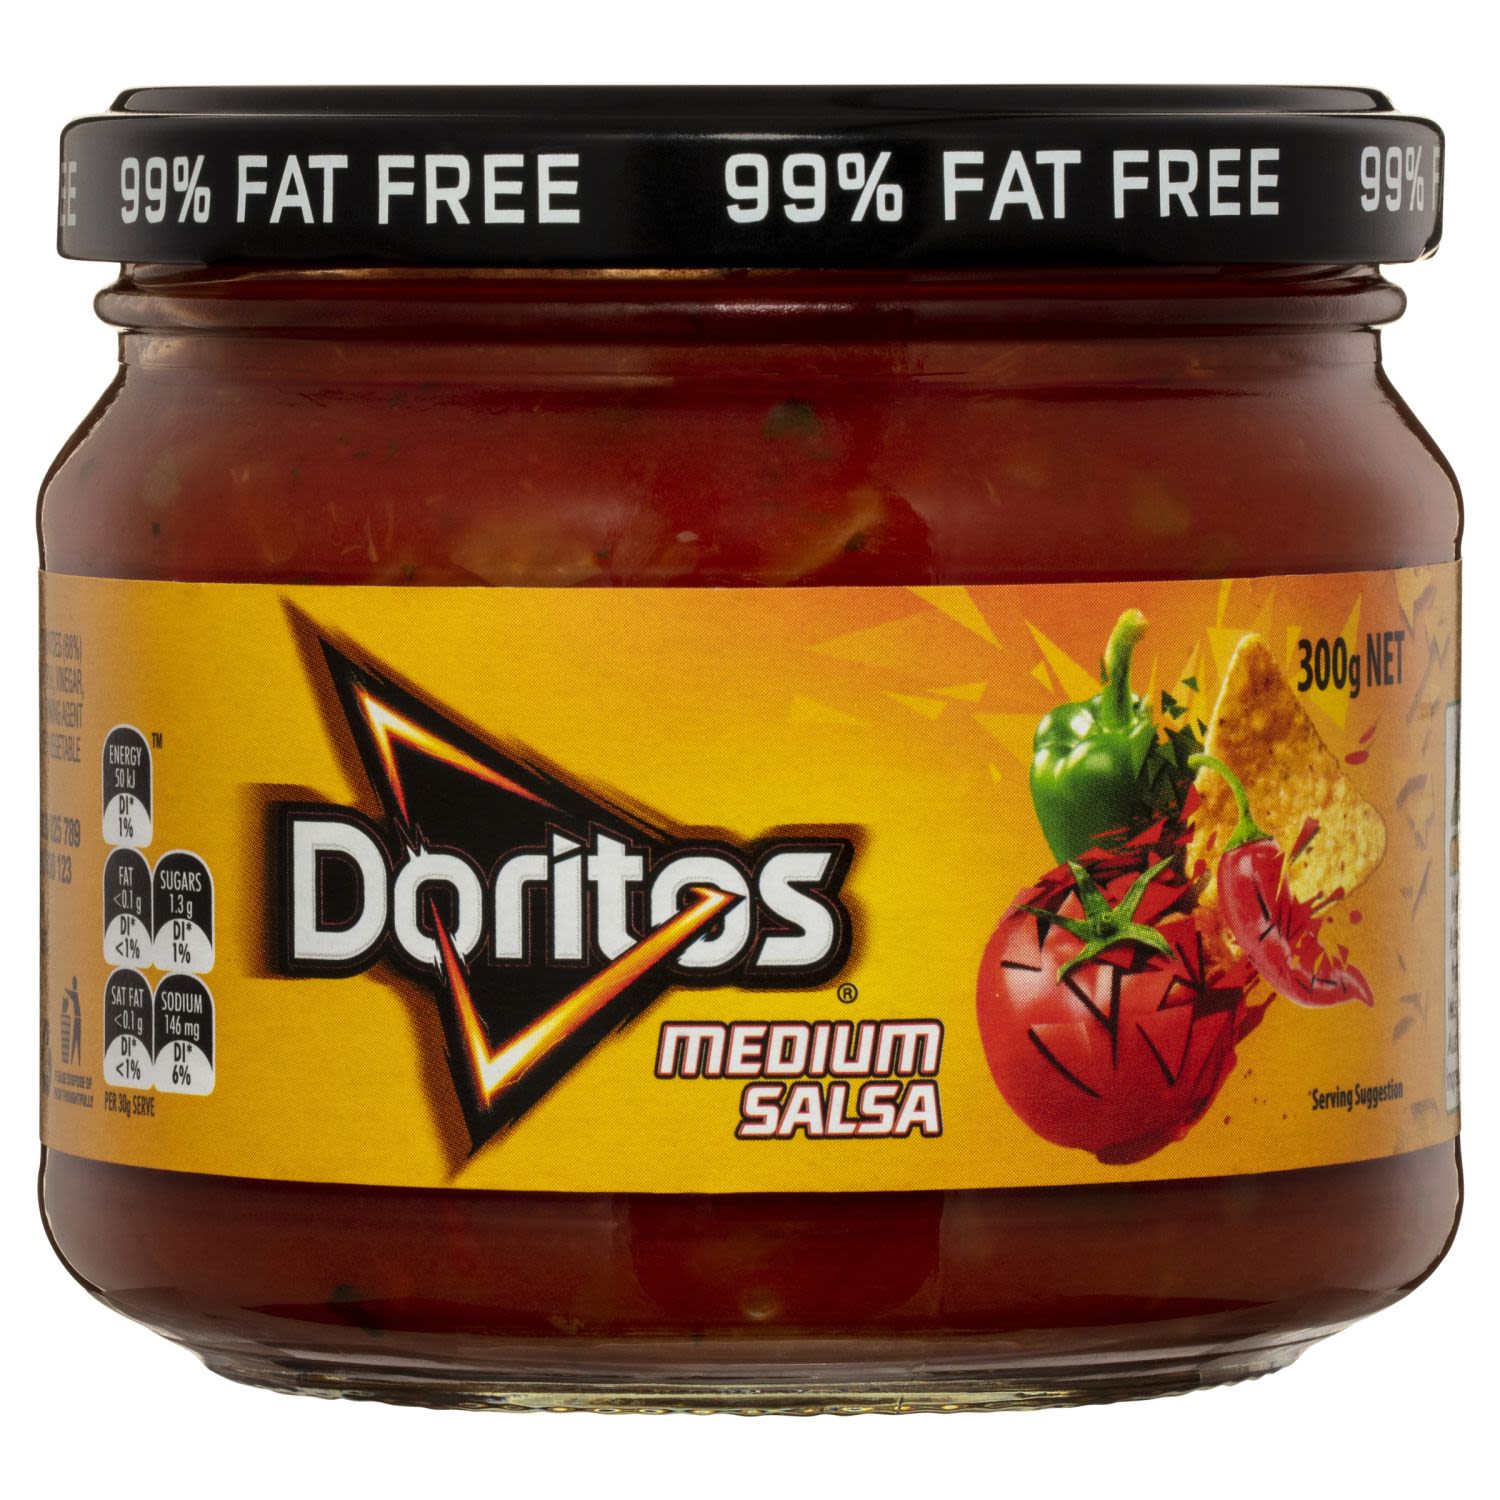 Doritos Medium Salsa, 300 Gram